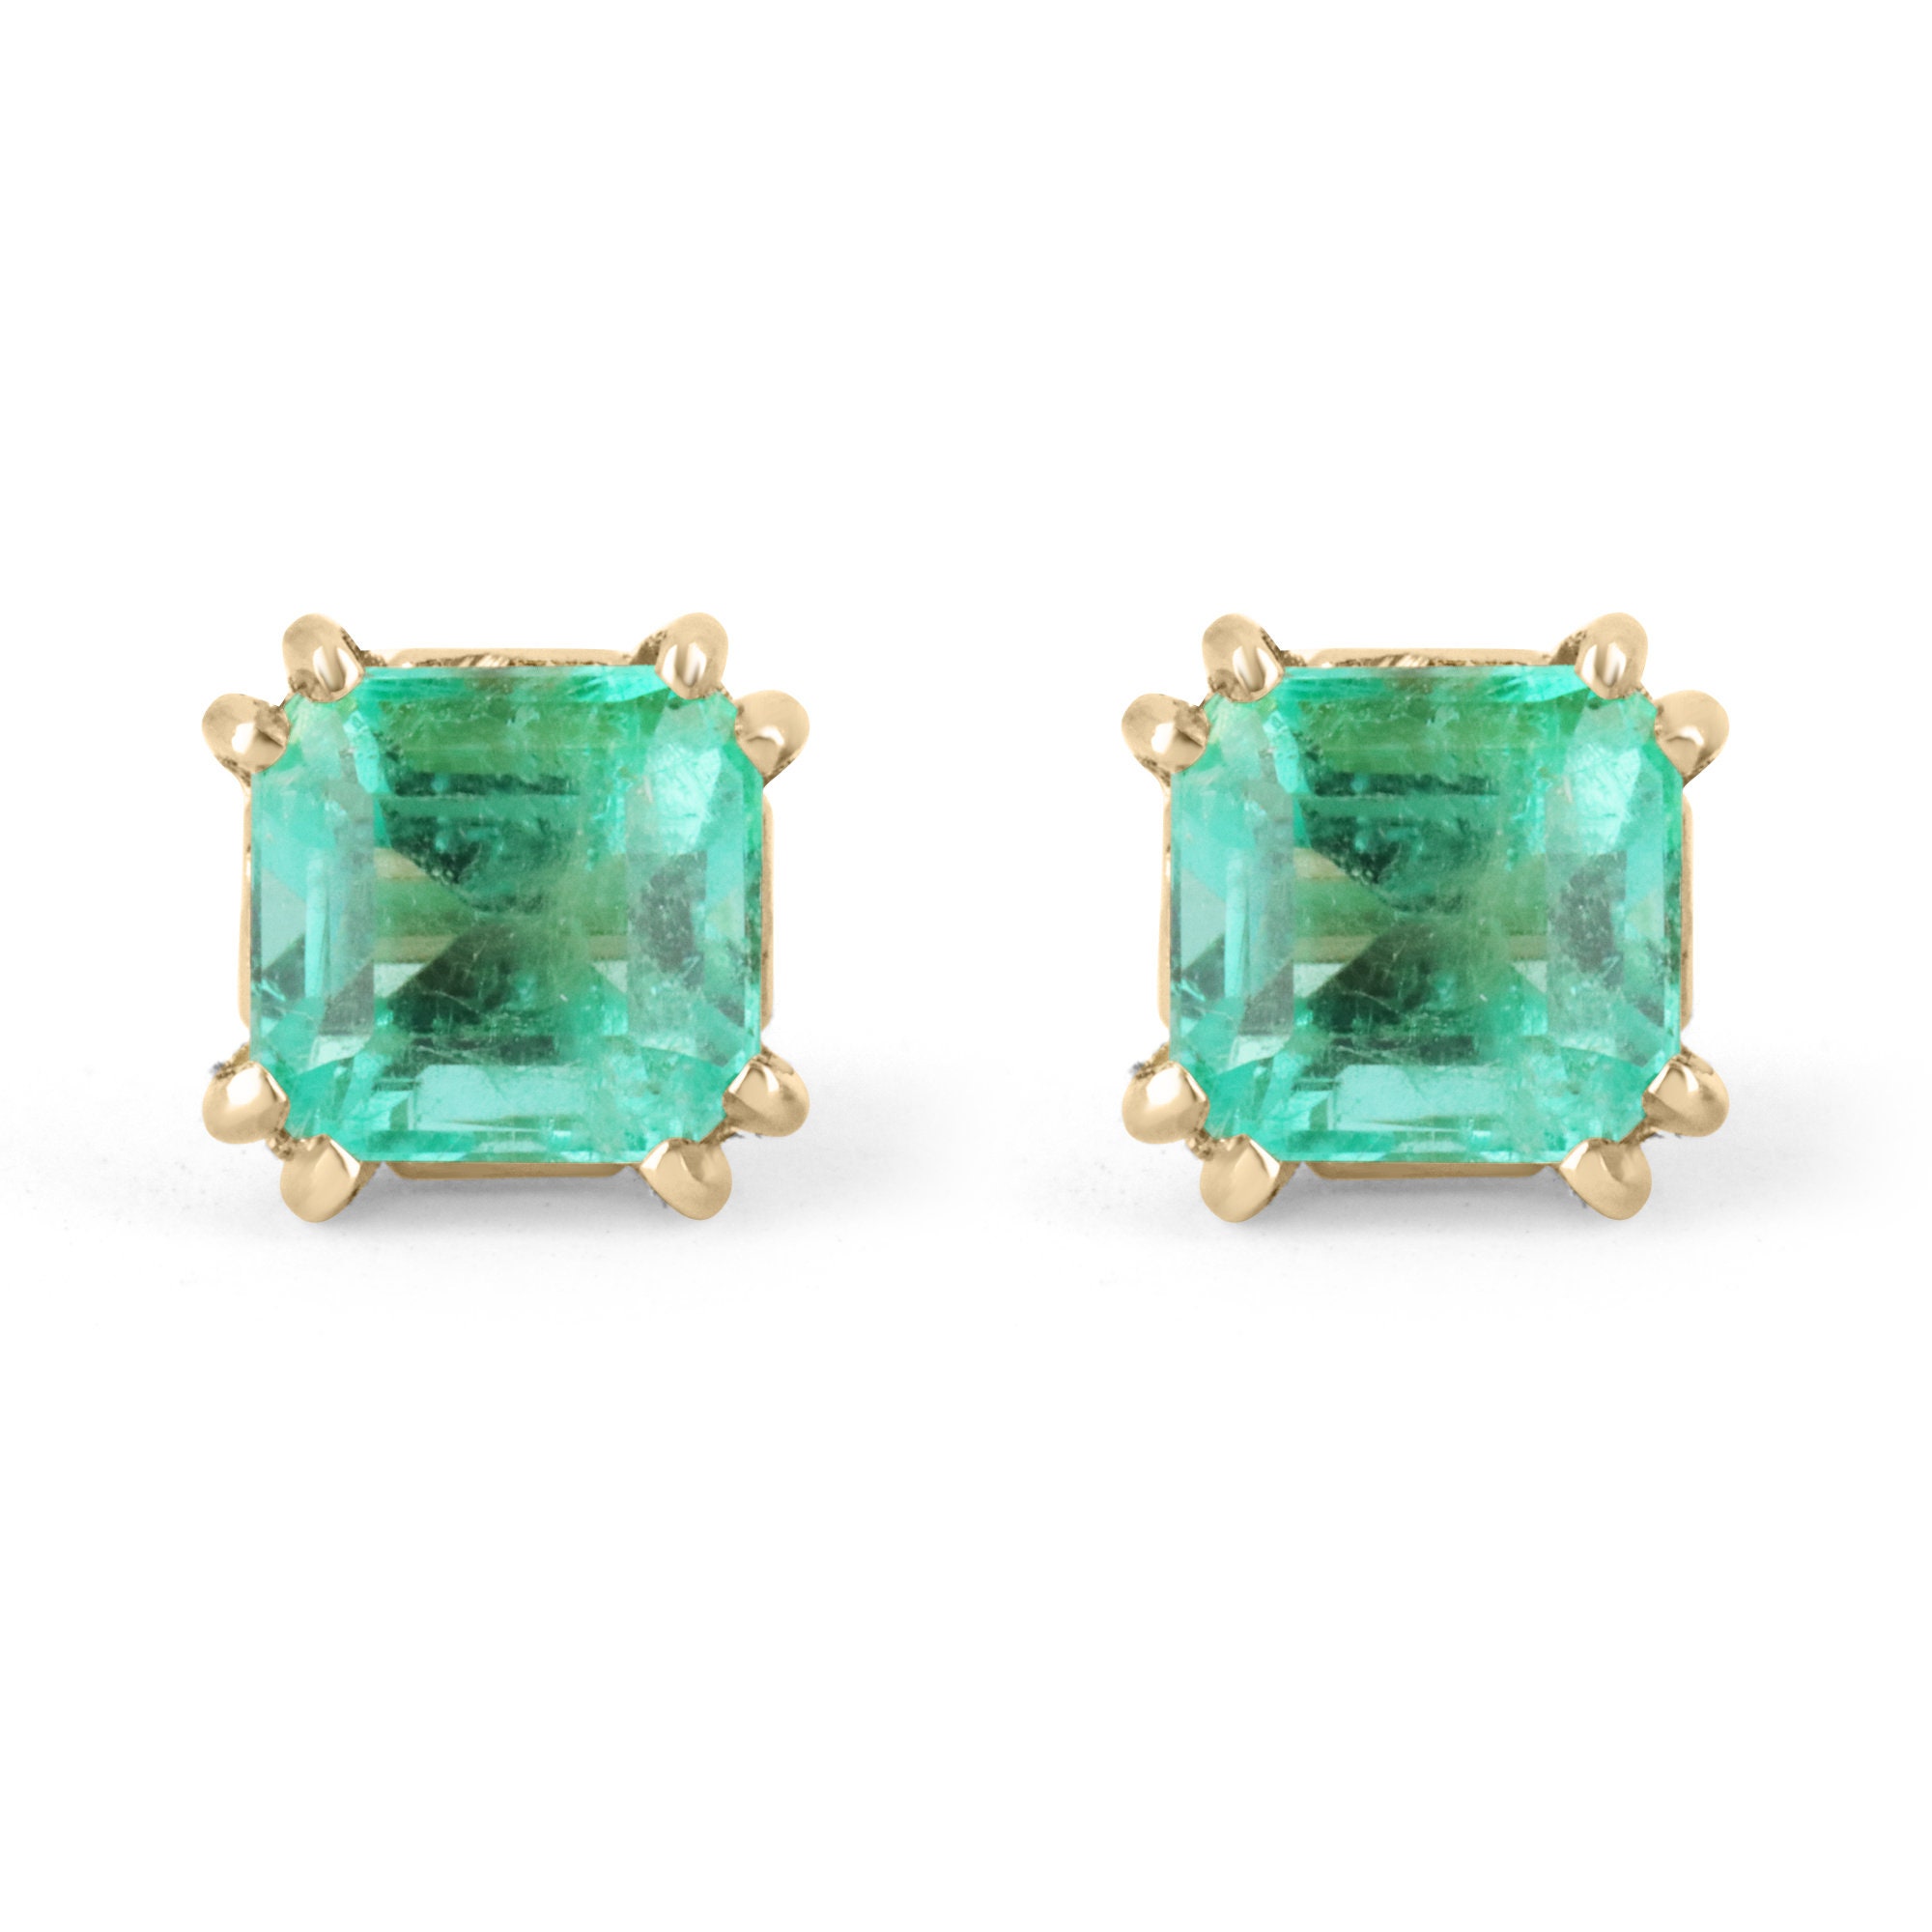 Buy Genuine Colombian Emerald Earrings Emerald Studs May Online in India   Etsy